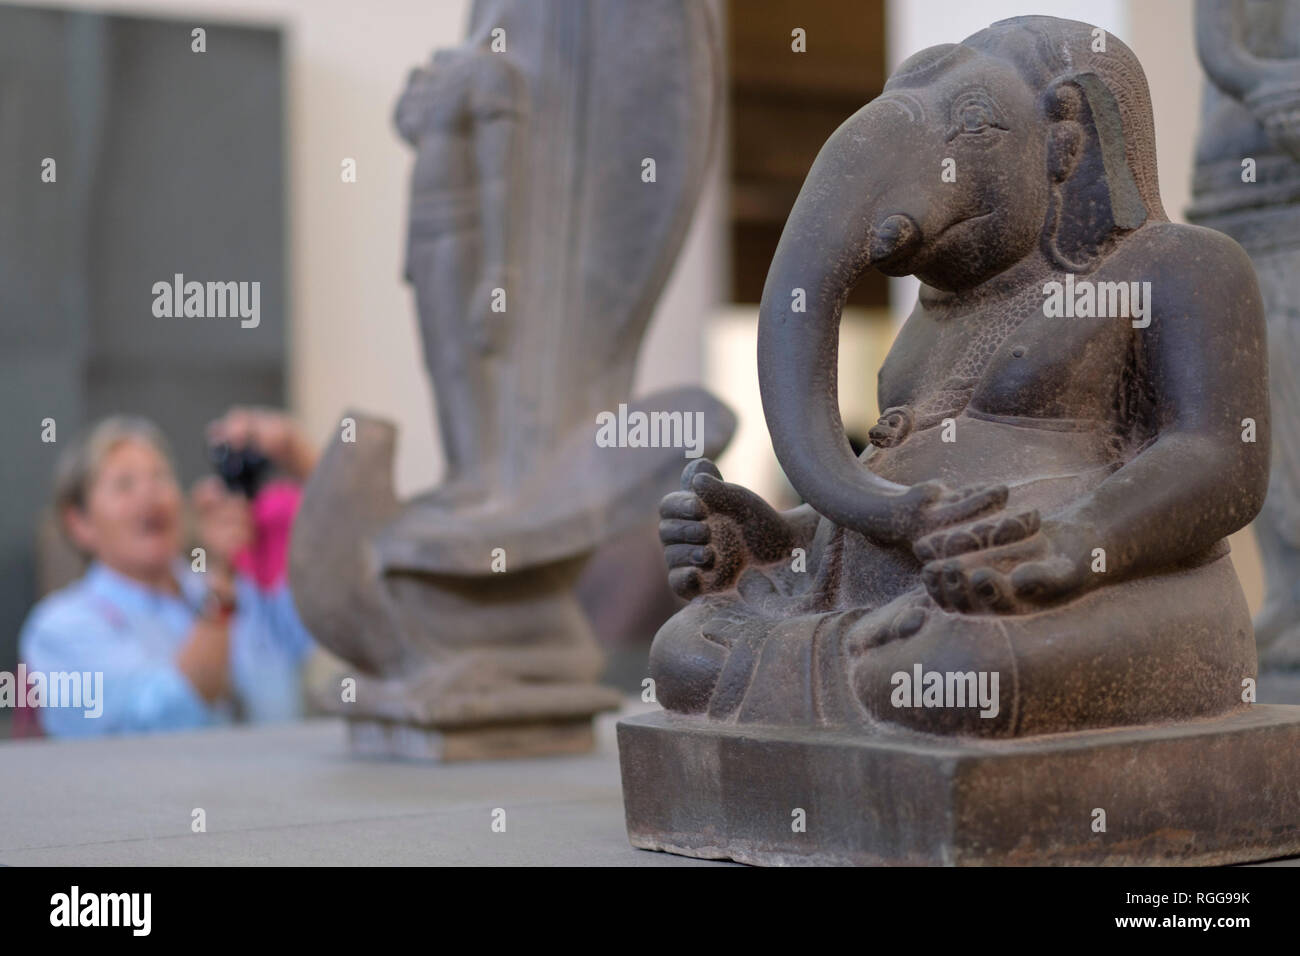 Statue of Hindu elephant head god Ganesha at the Museum of Cham Sculpture in Da Nang, Vietnam, Asia Stock Photo